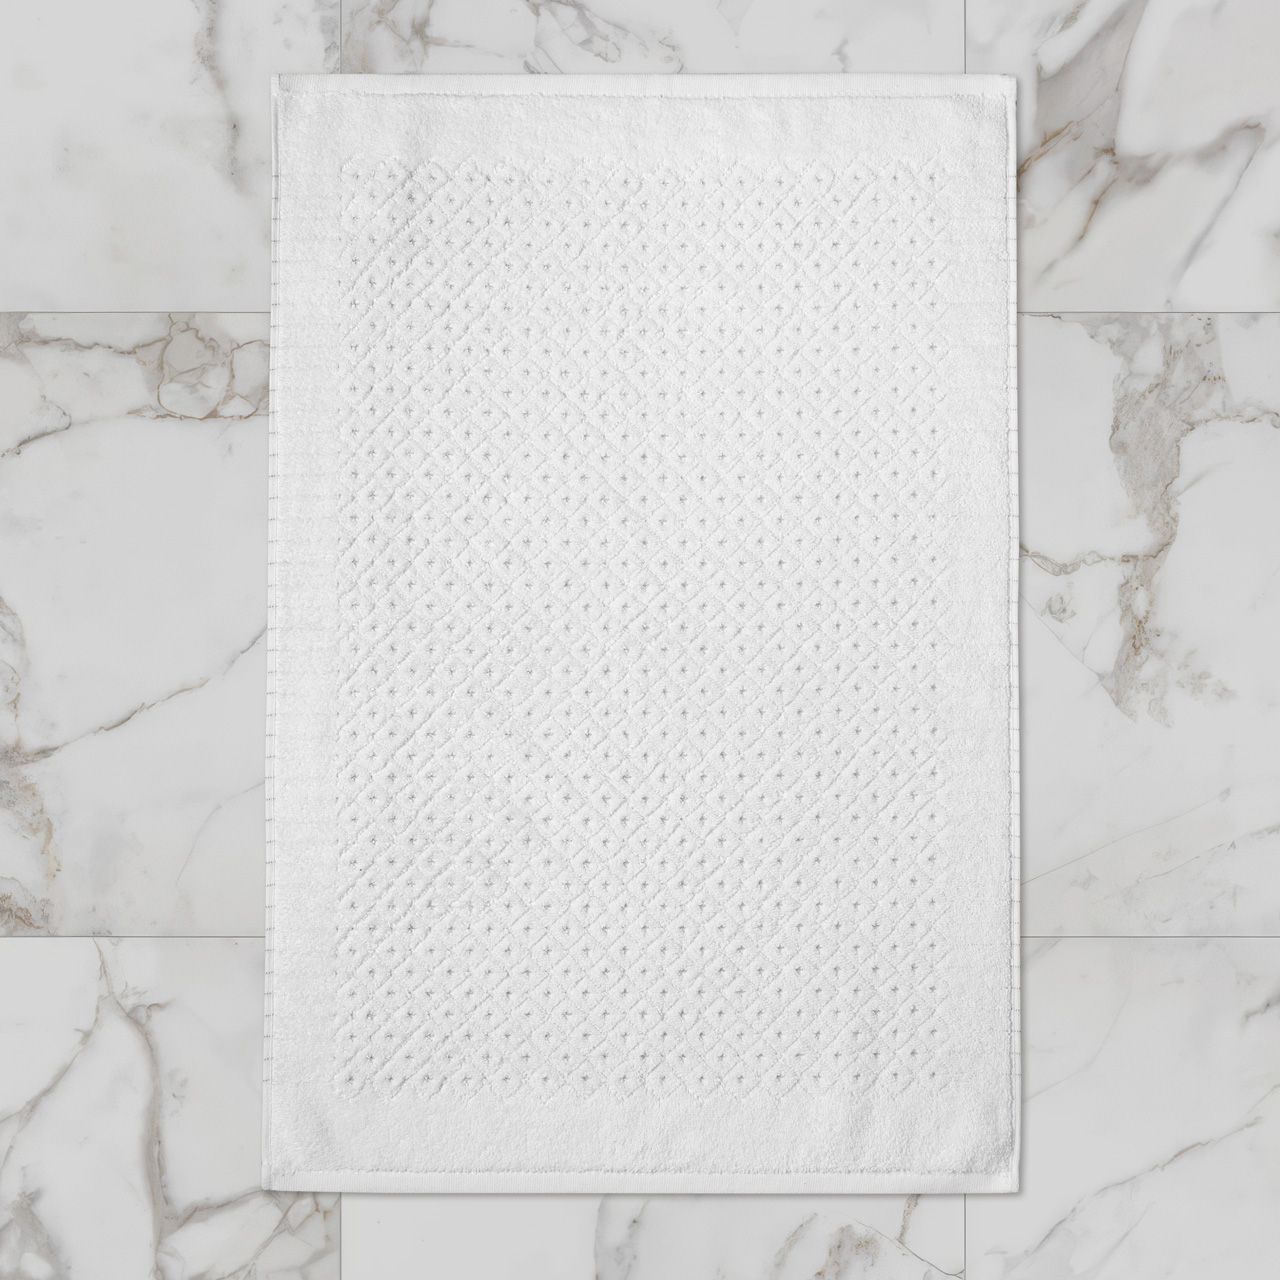 Коврик для ванной Эколайн цвет: белый (50х70 см), размер 50х70 см